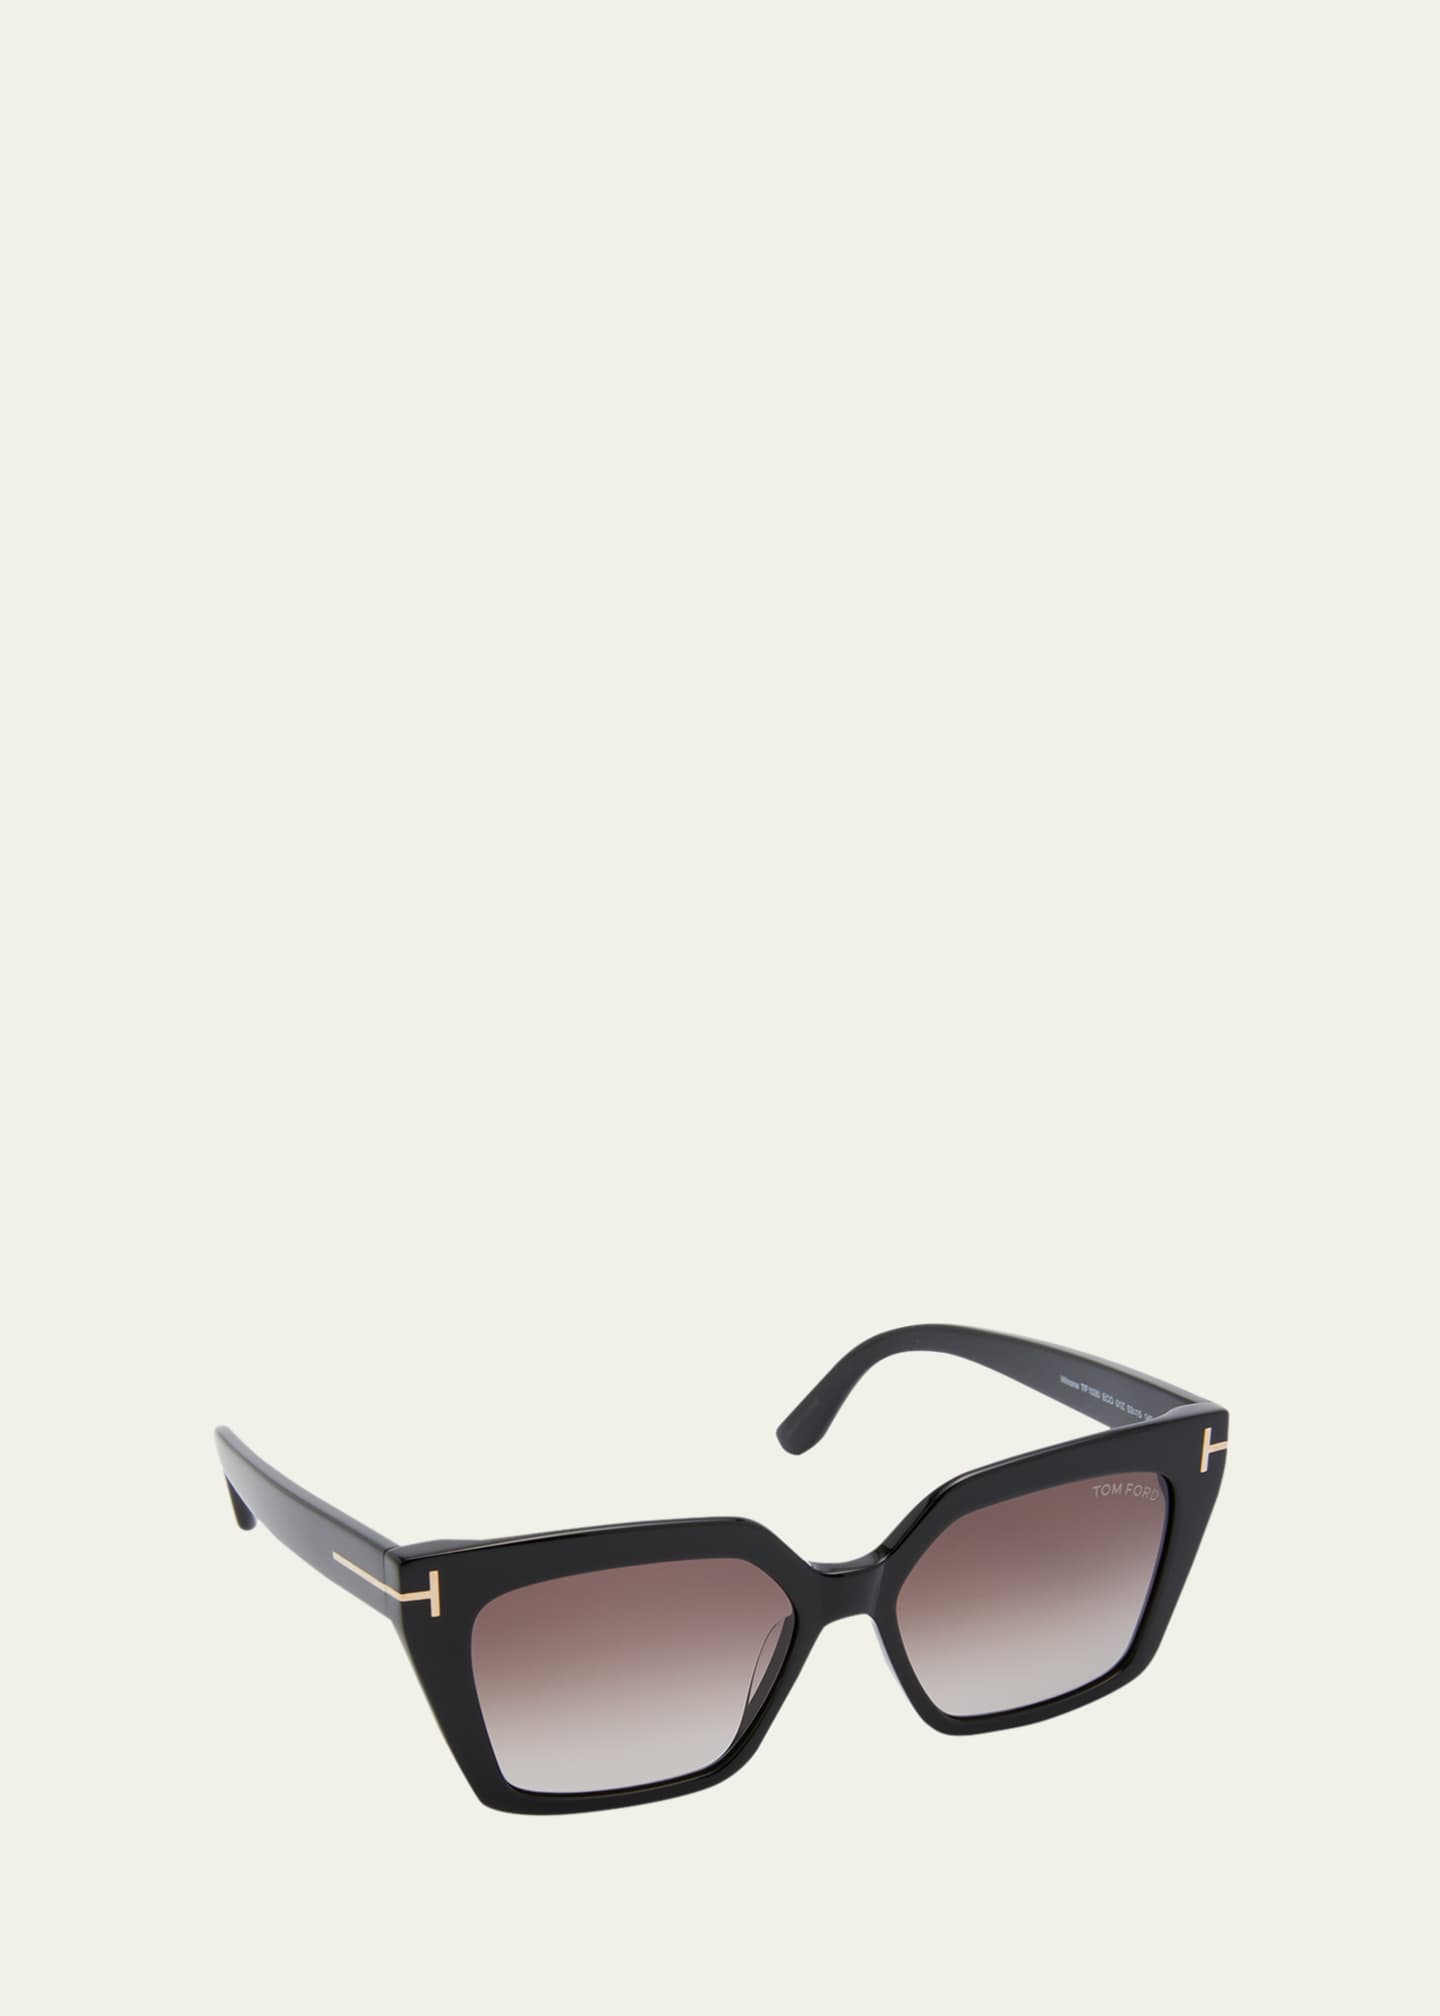 TOM FORD Winona Acetate T-Logo Cat-Eye Sunglasses - Bergdorf Goodman